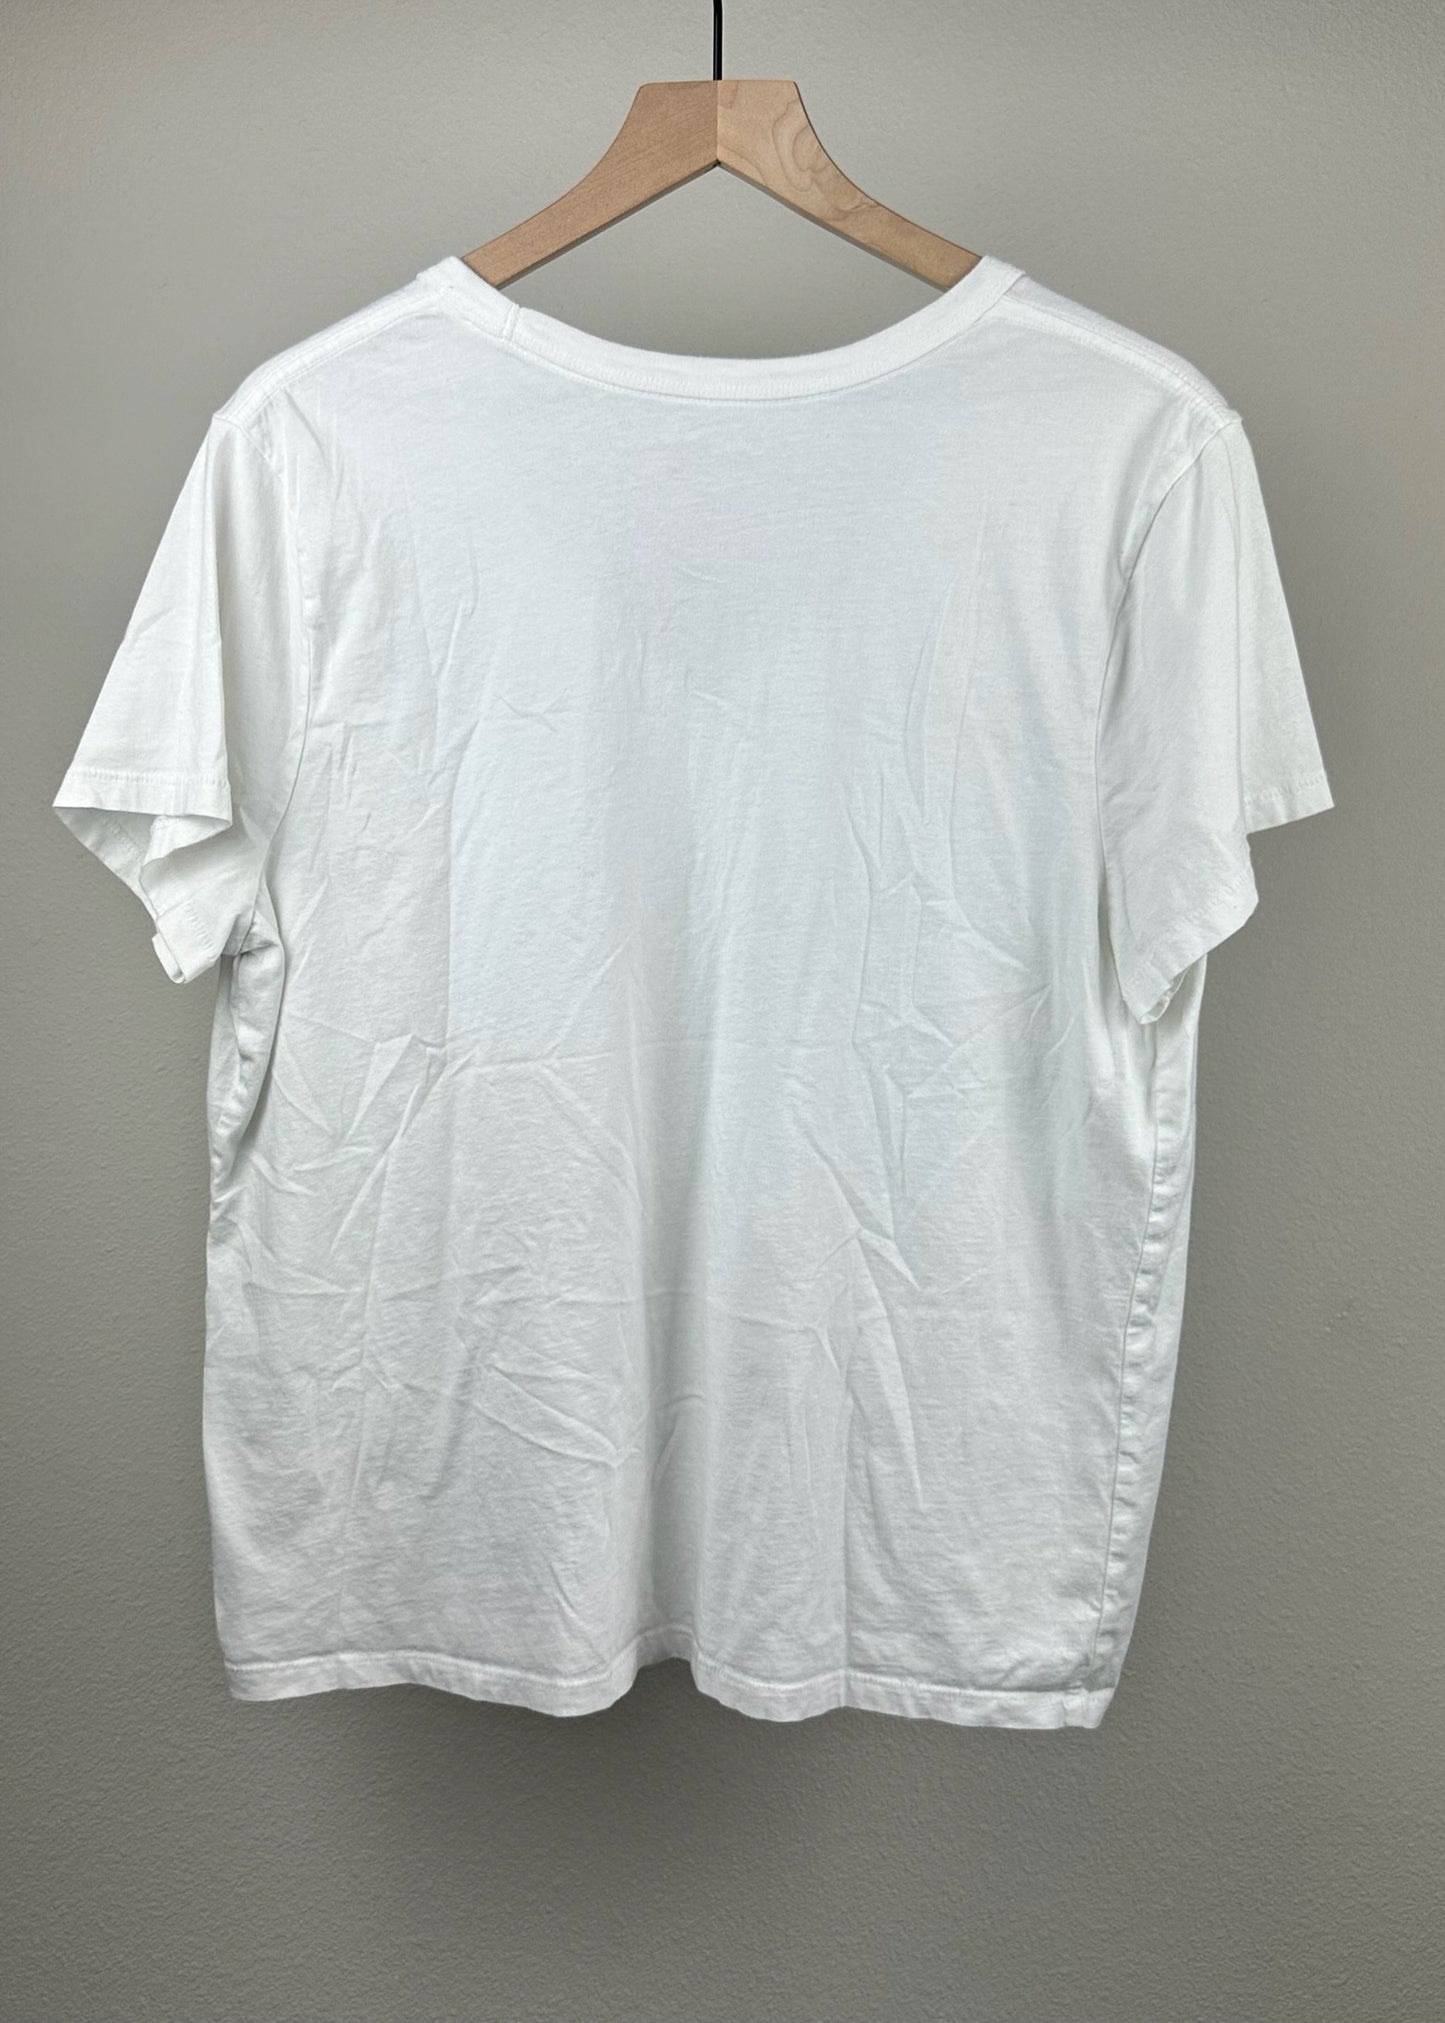 Basic White T-Shirt by Universal Threads